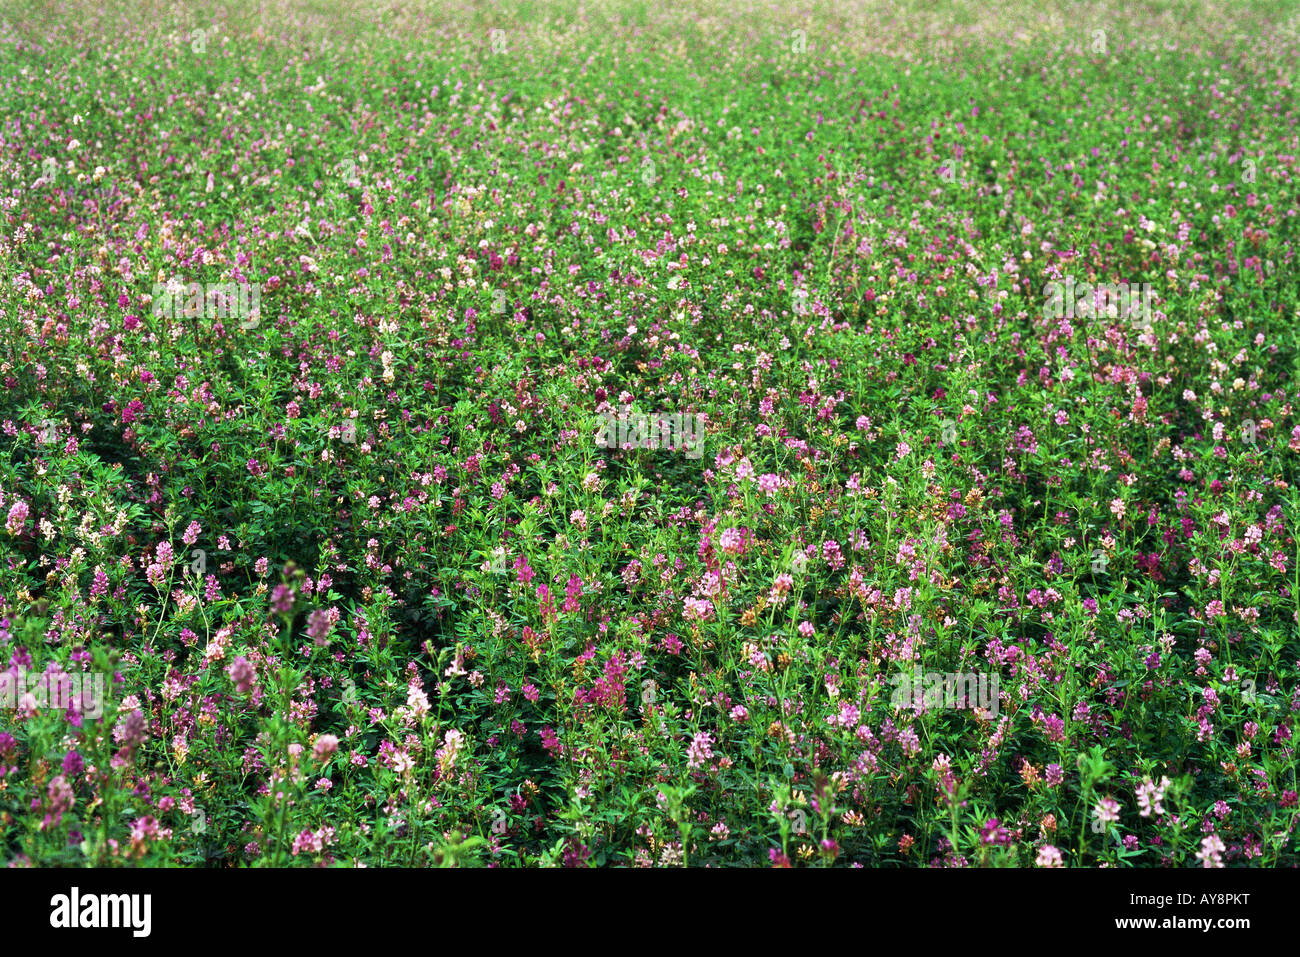 Wildflowers growing in field Stock Photo